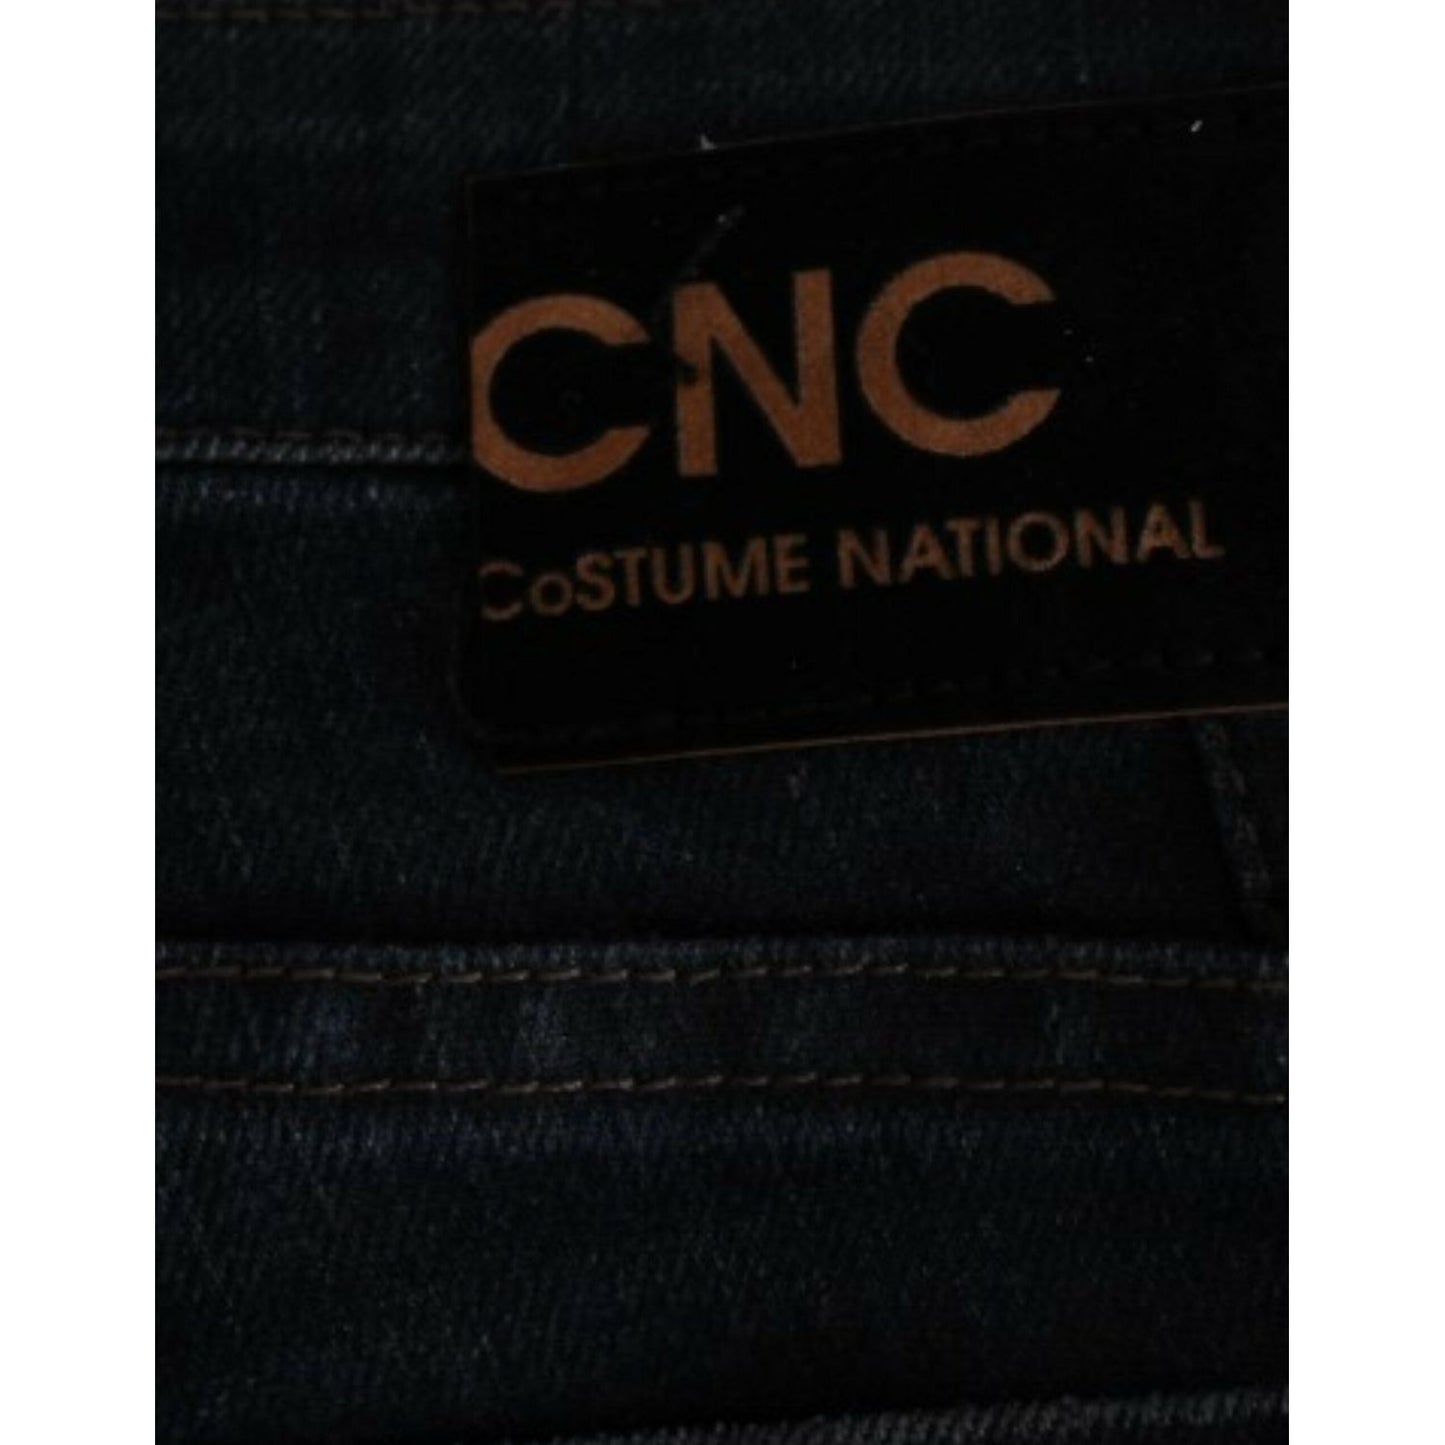 Costume National Chic Superskinny Blue Denim Jeans blue-skinnny-leg-jeans